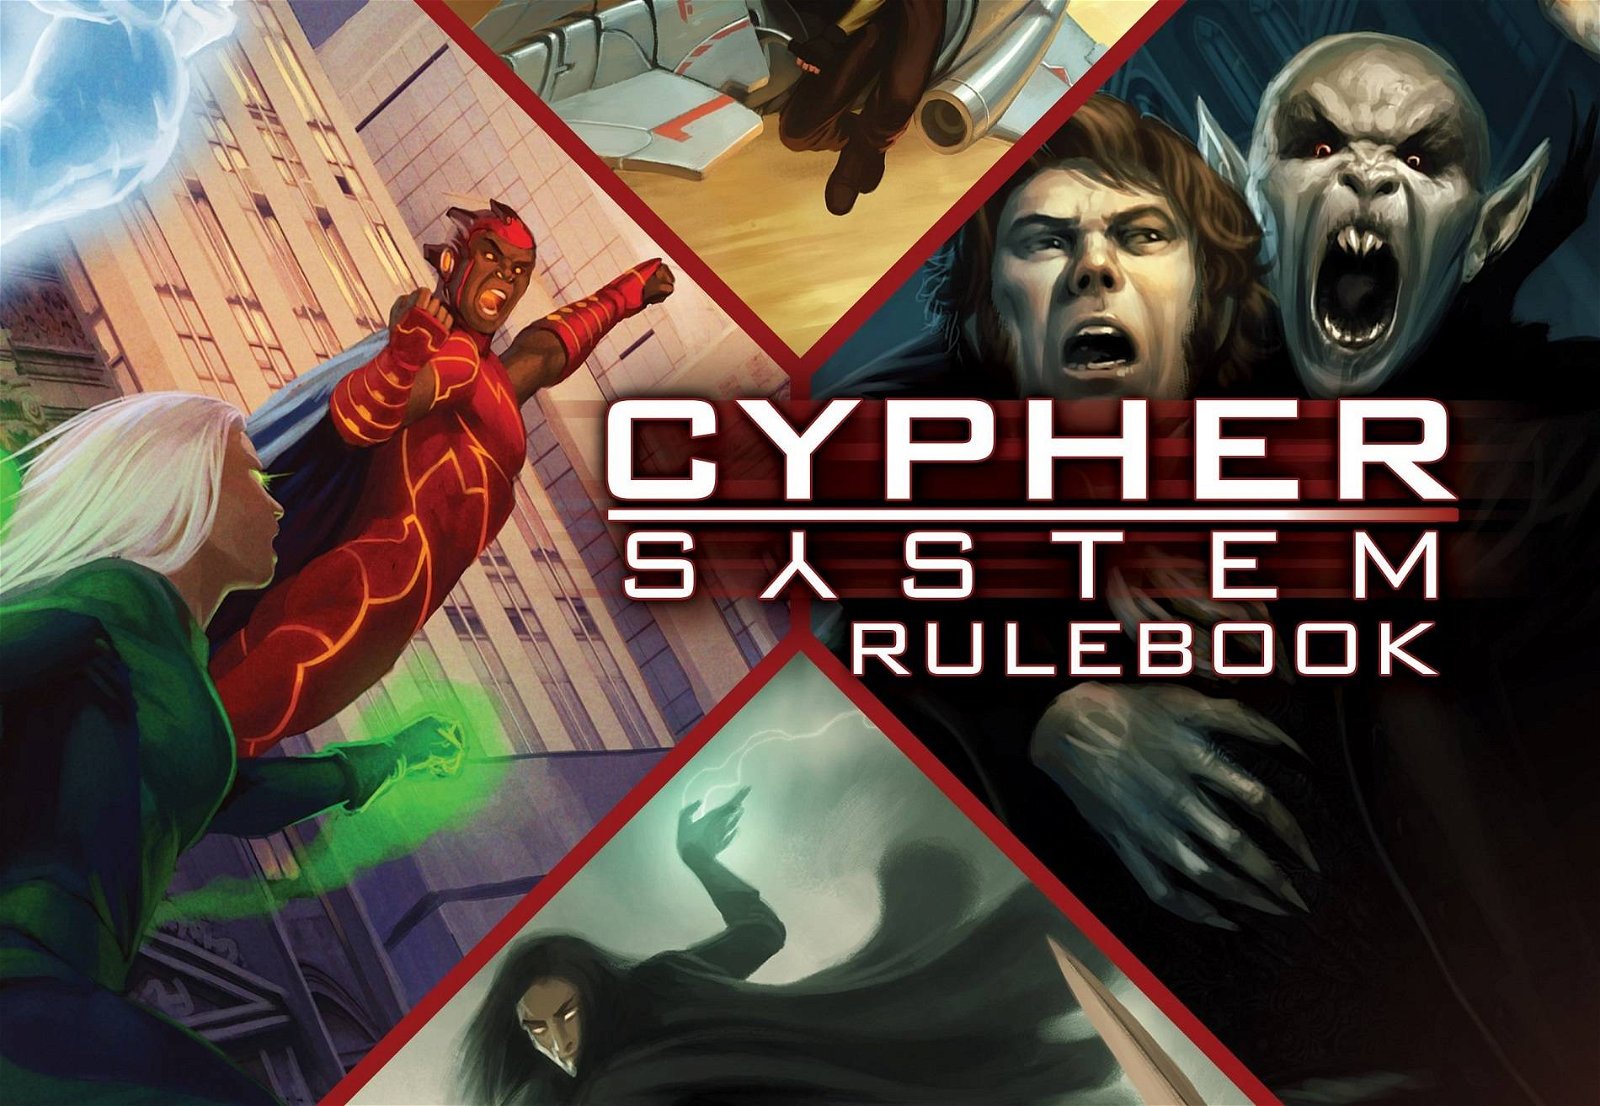 Immagine di Recensione: Cypher System Rulebook, un solo manuale per infiniti mondi